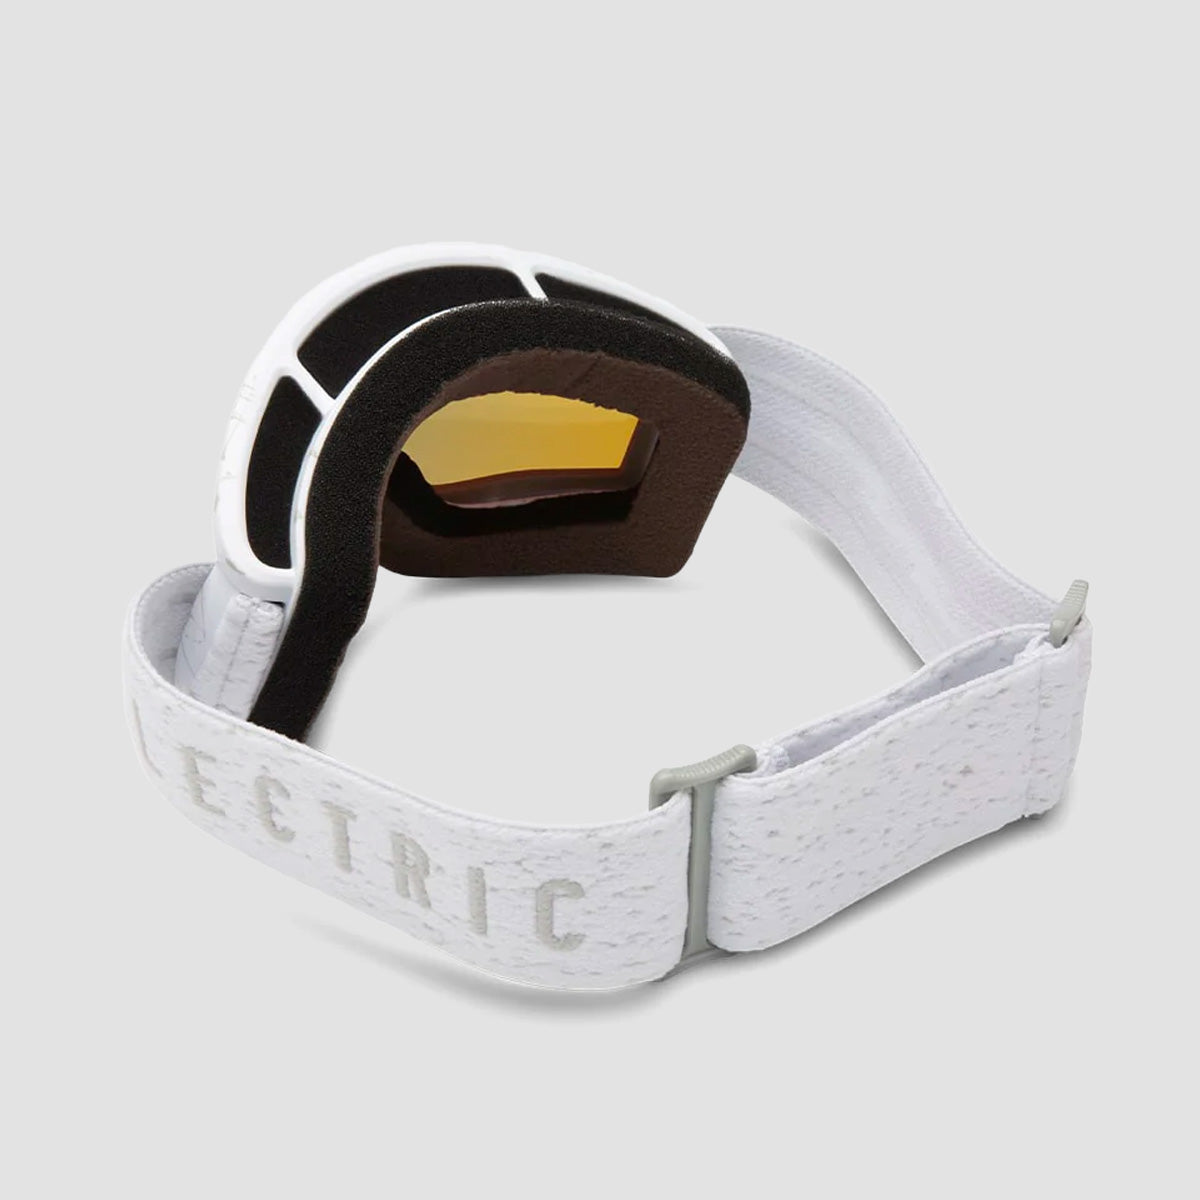 Electric EGV.K Snow Goggles Matte Speckled White/Gold Chrome - Kids